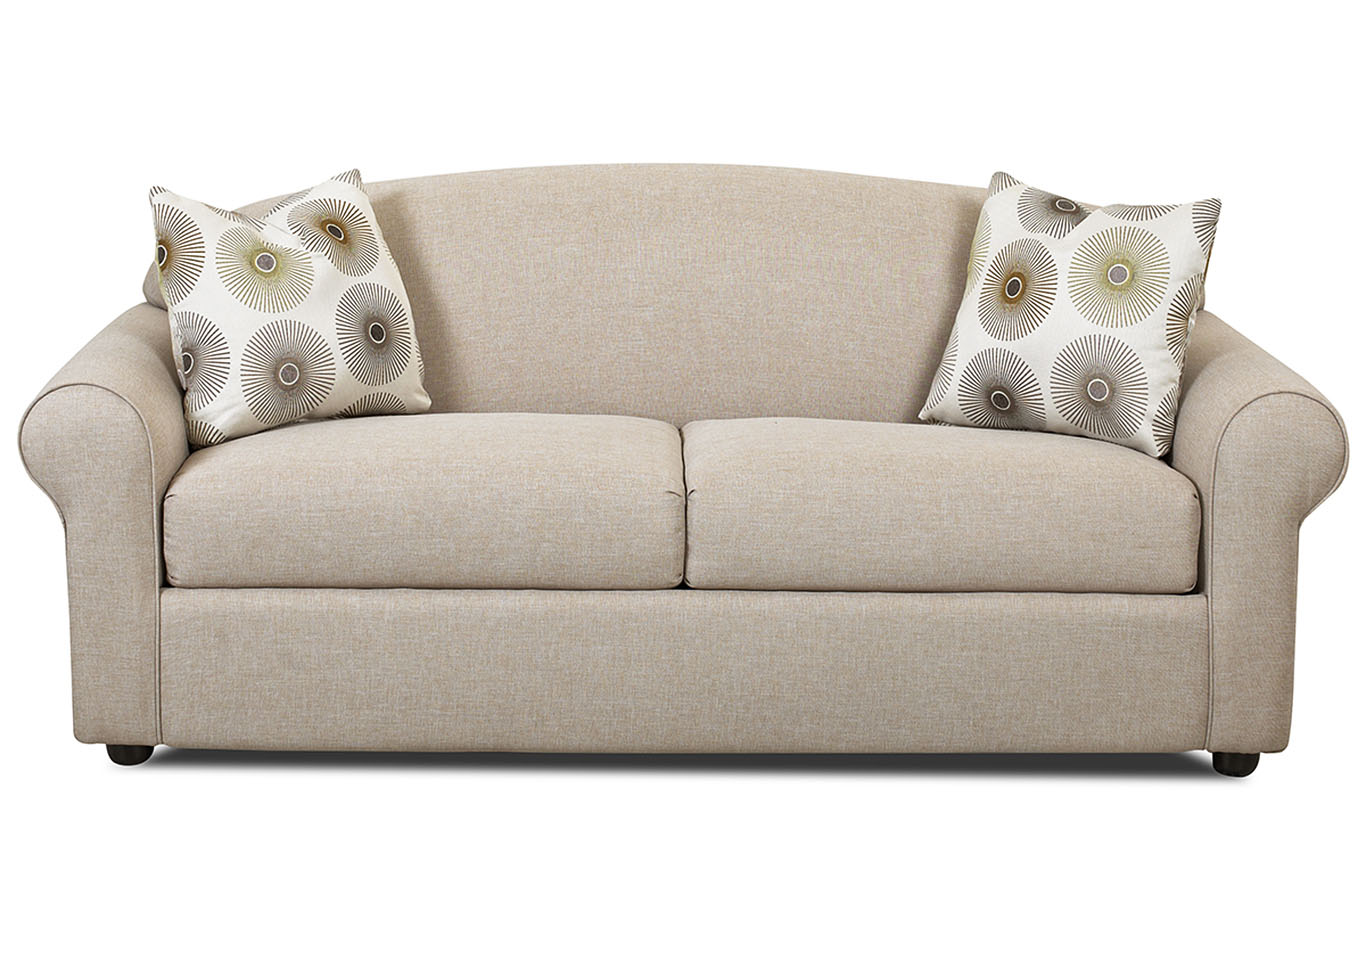 Possibilities Beige Sleeper Fabric Sofa,Klaussner Home Furnishings